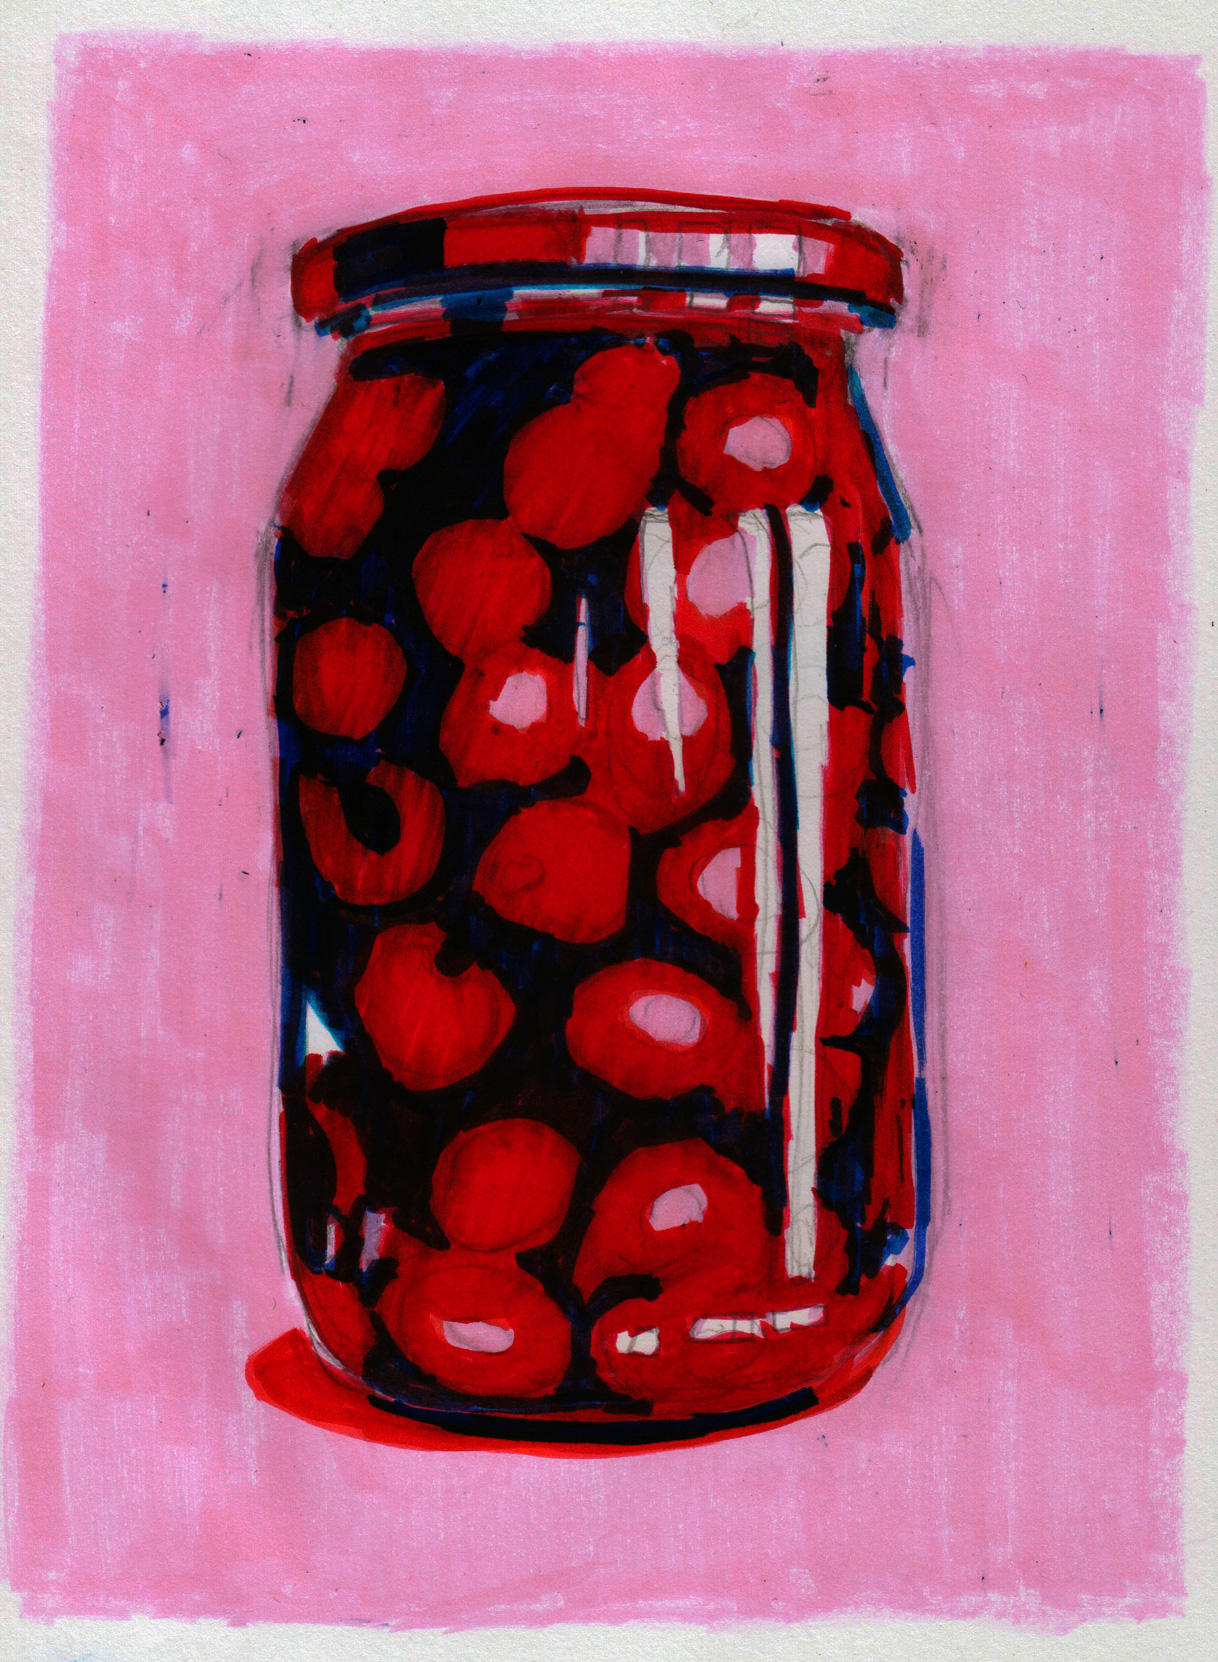 felt pen illustration of cherries in a jar